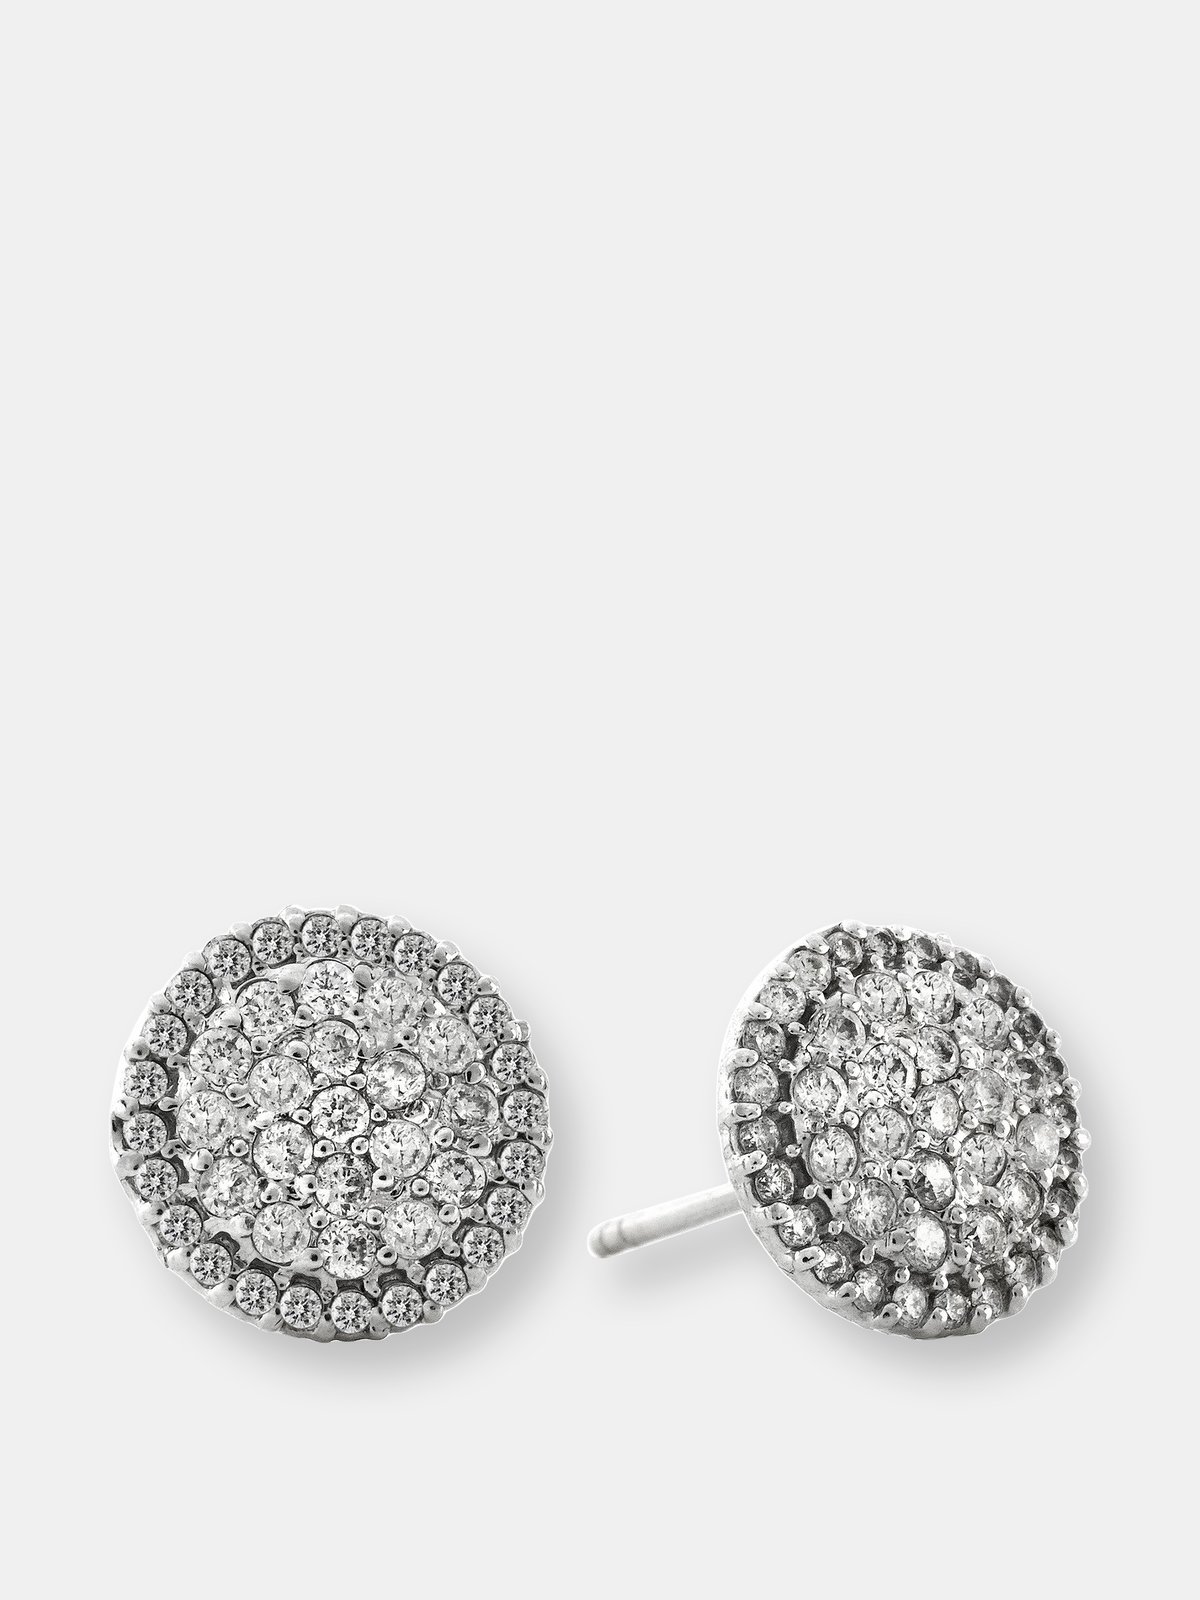 Ariana Rabbani Pave Diamond Domed Disc Earrings | Verishop